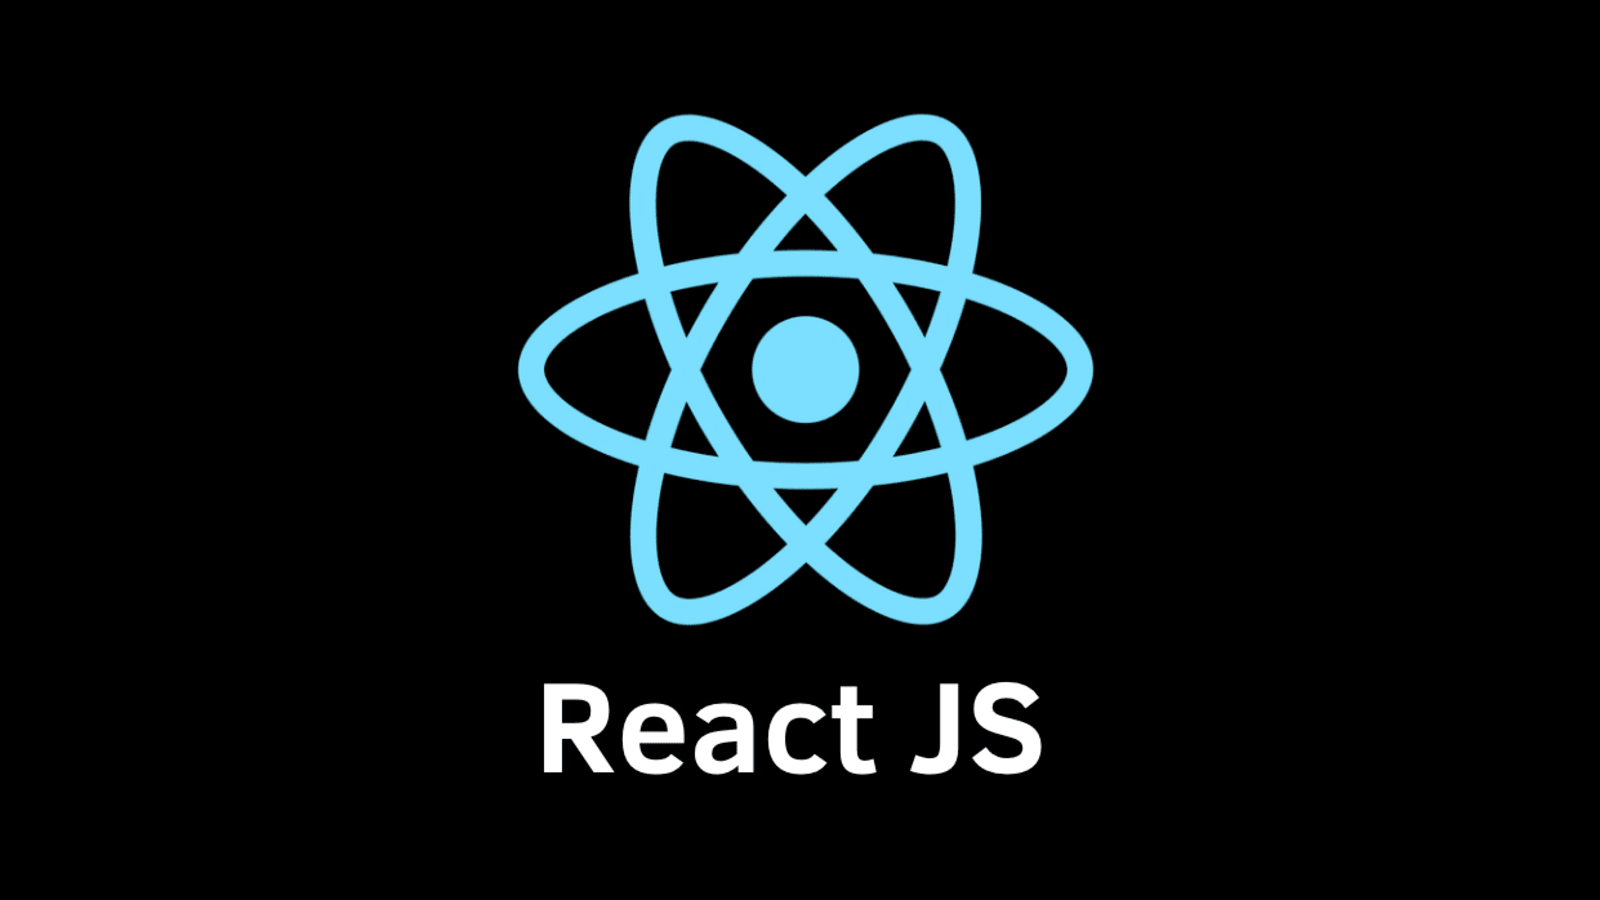 Middle React.js developer